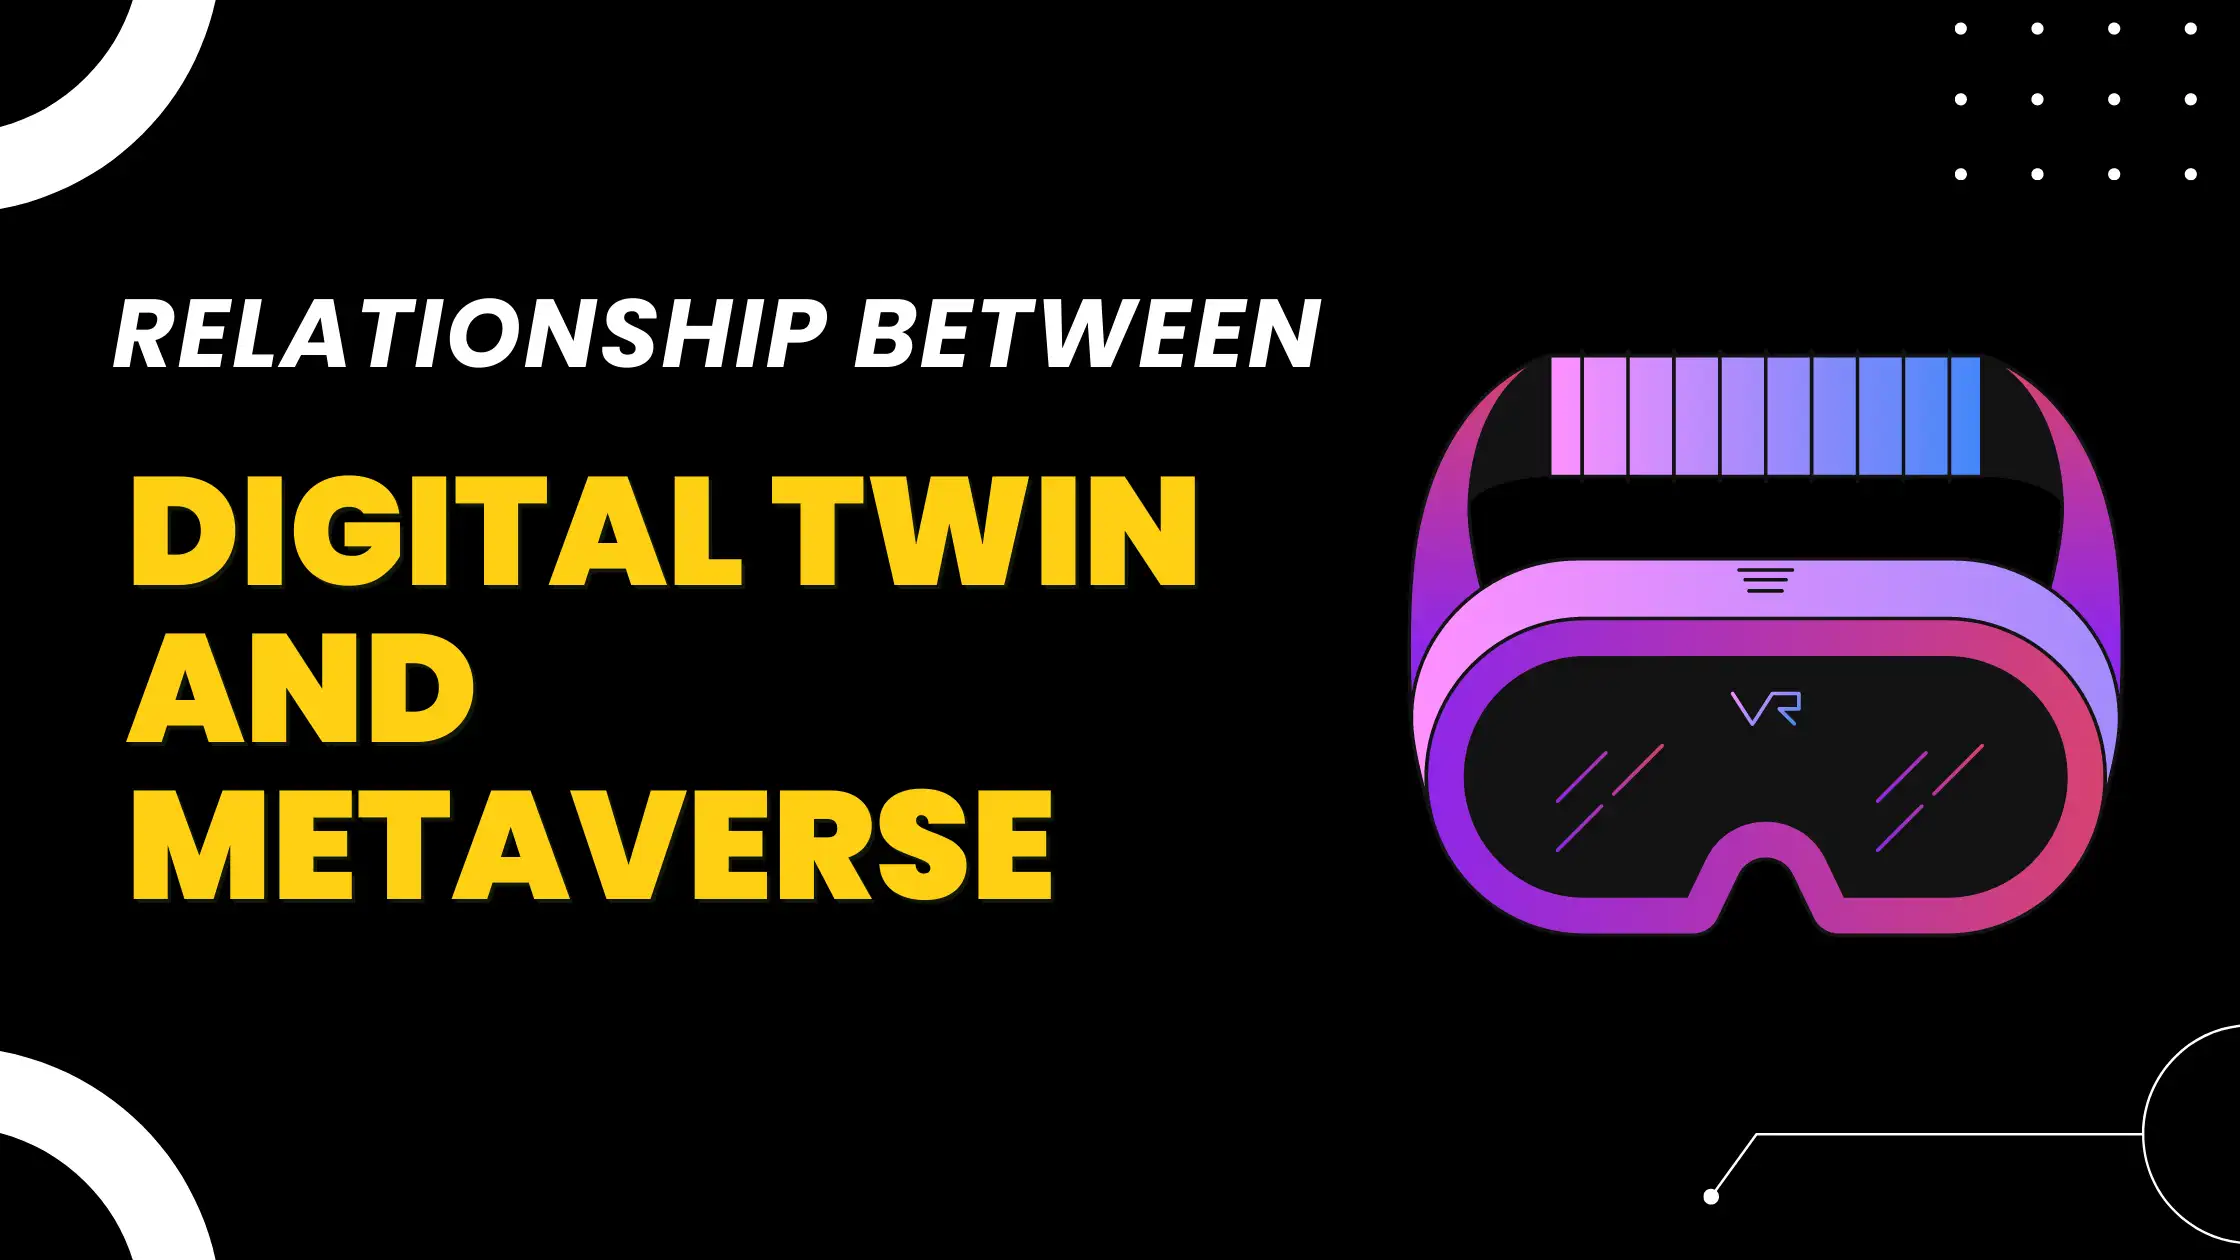 Relationship between digital twin and metaverse